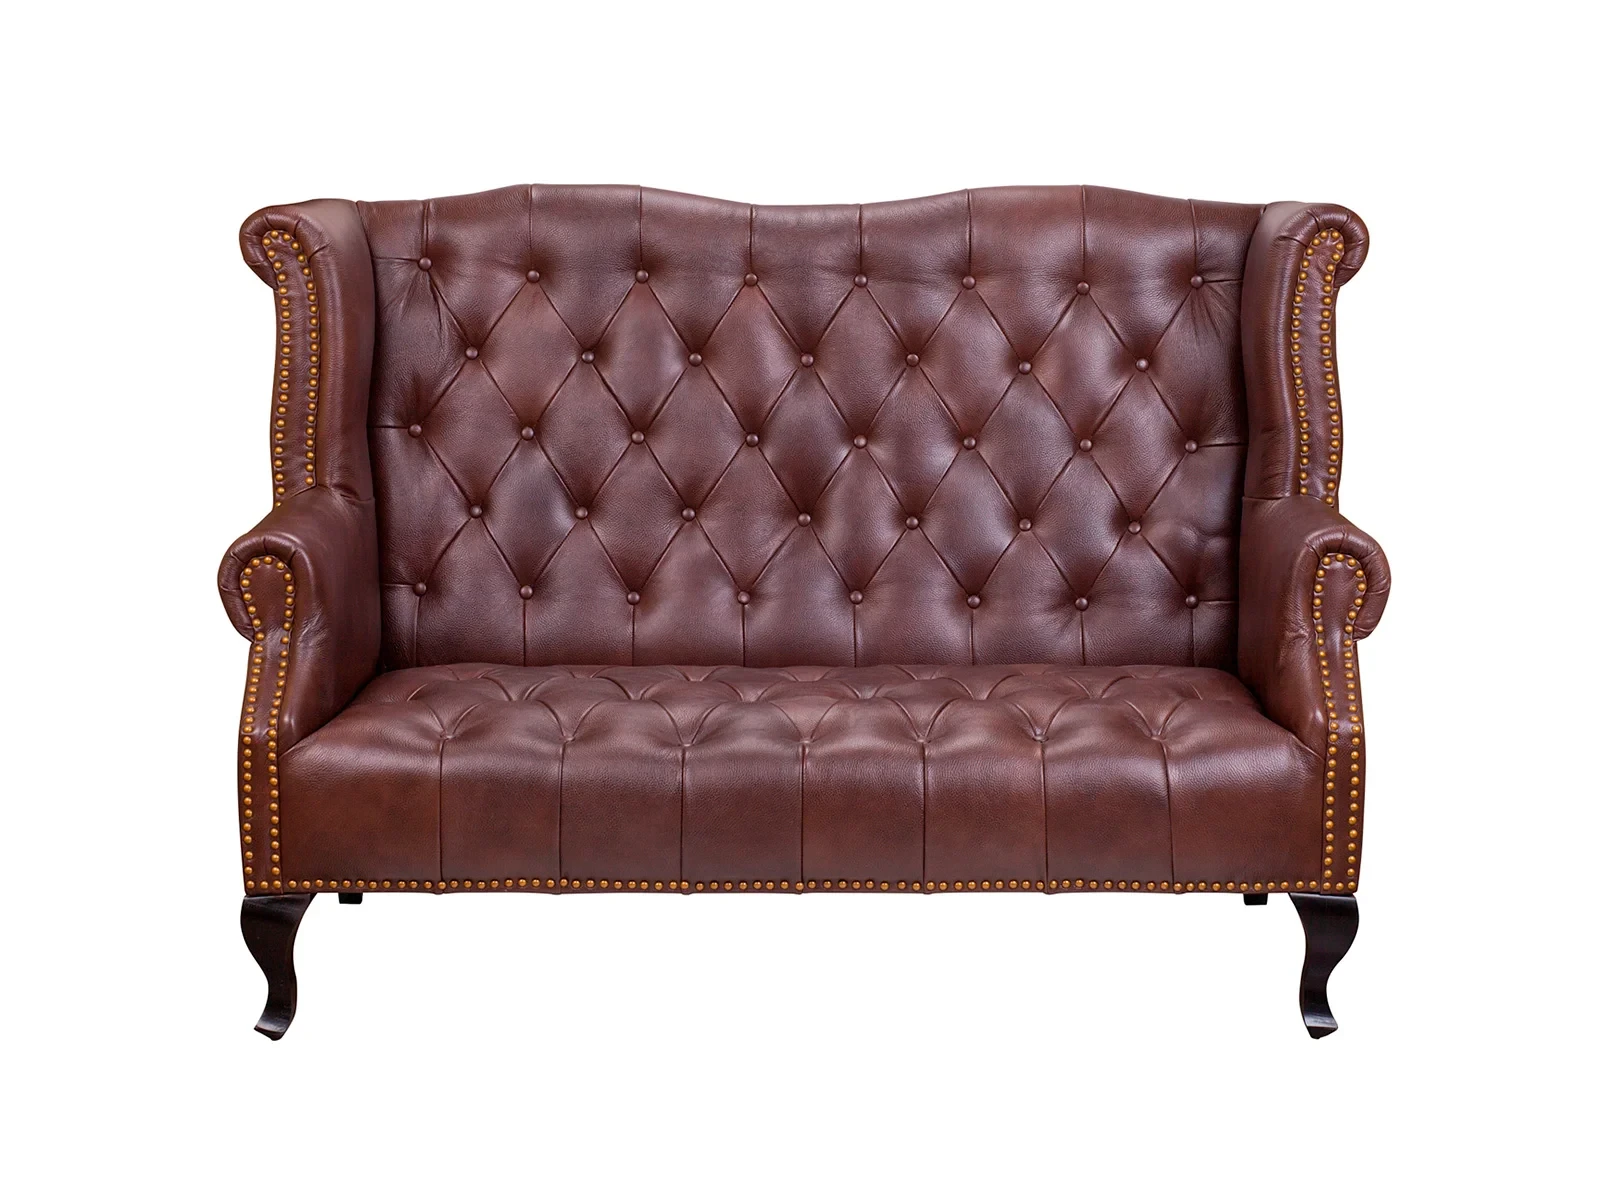 Диван Royal sofa brown 624962  - фото 1